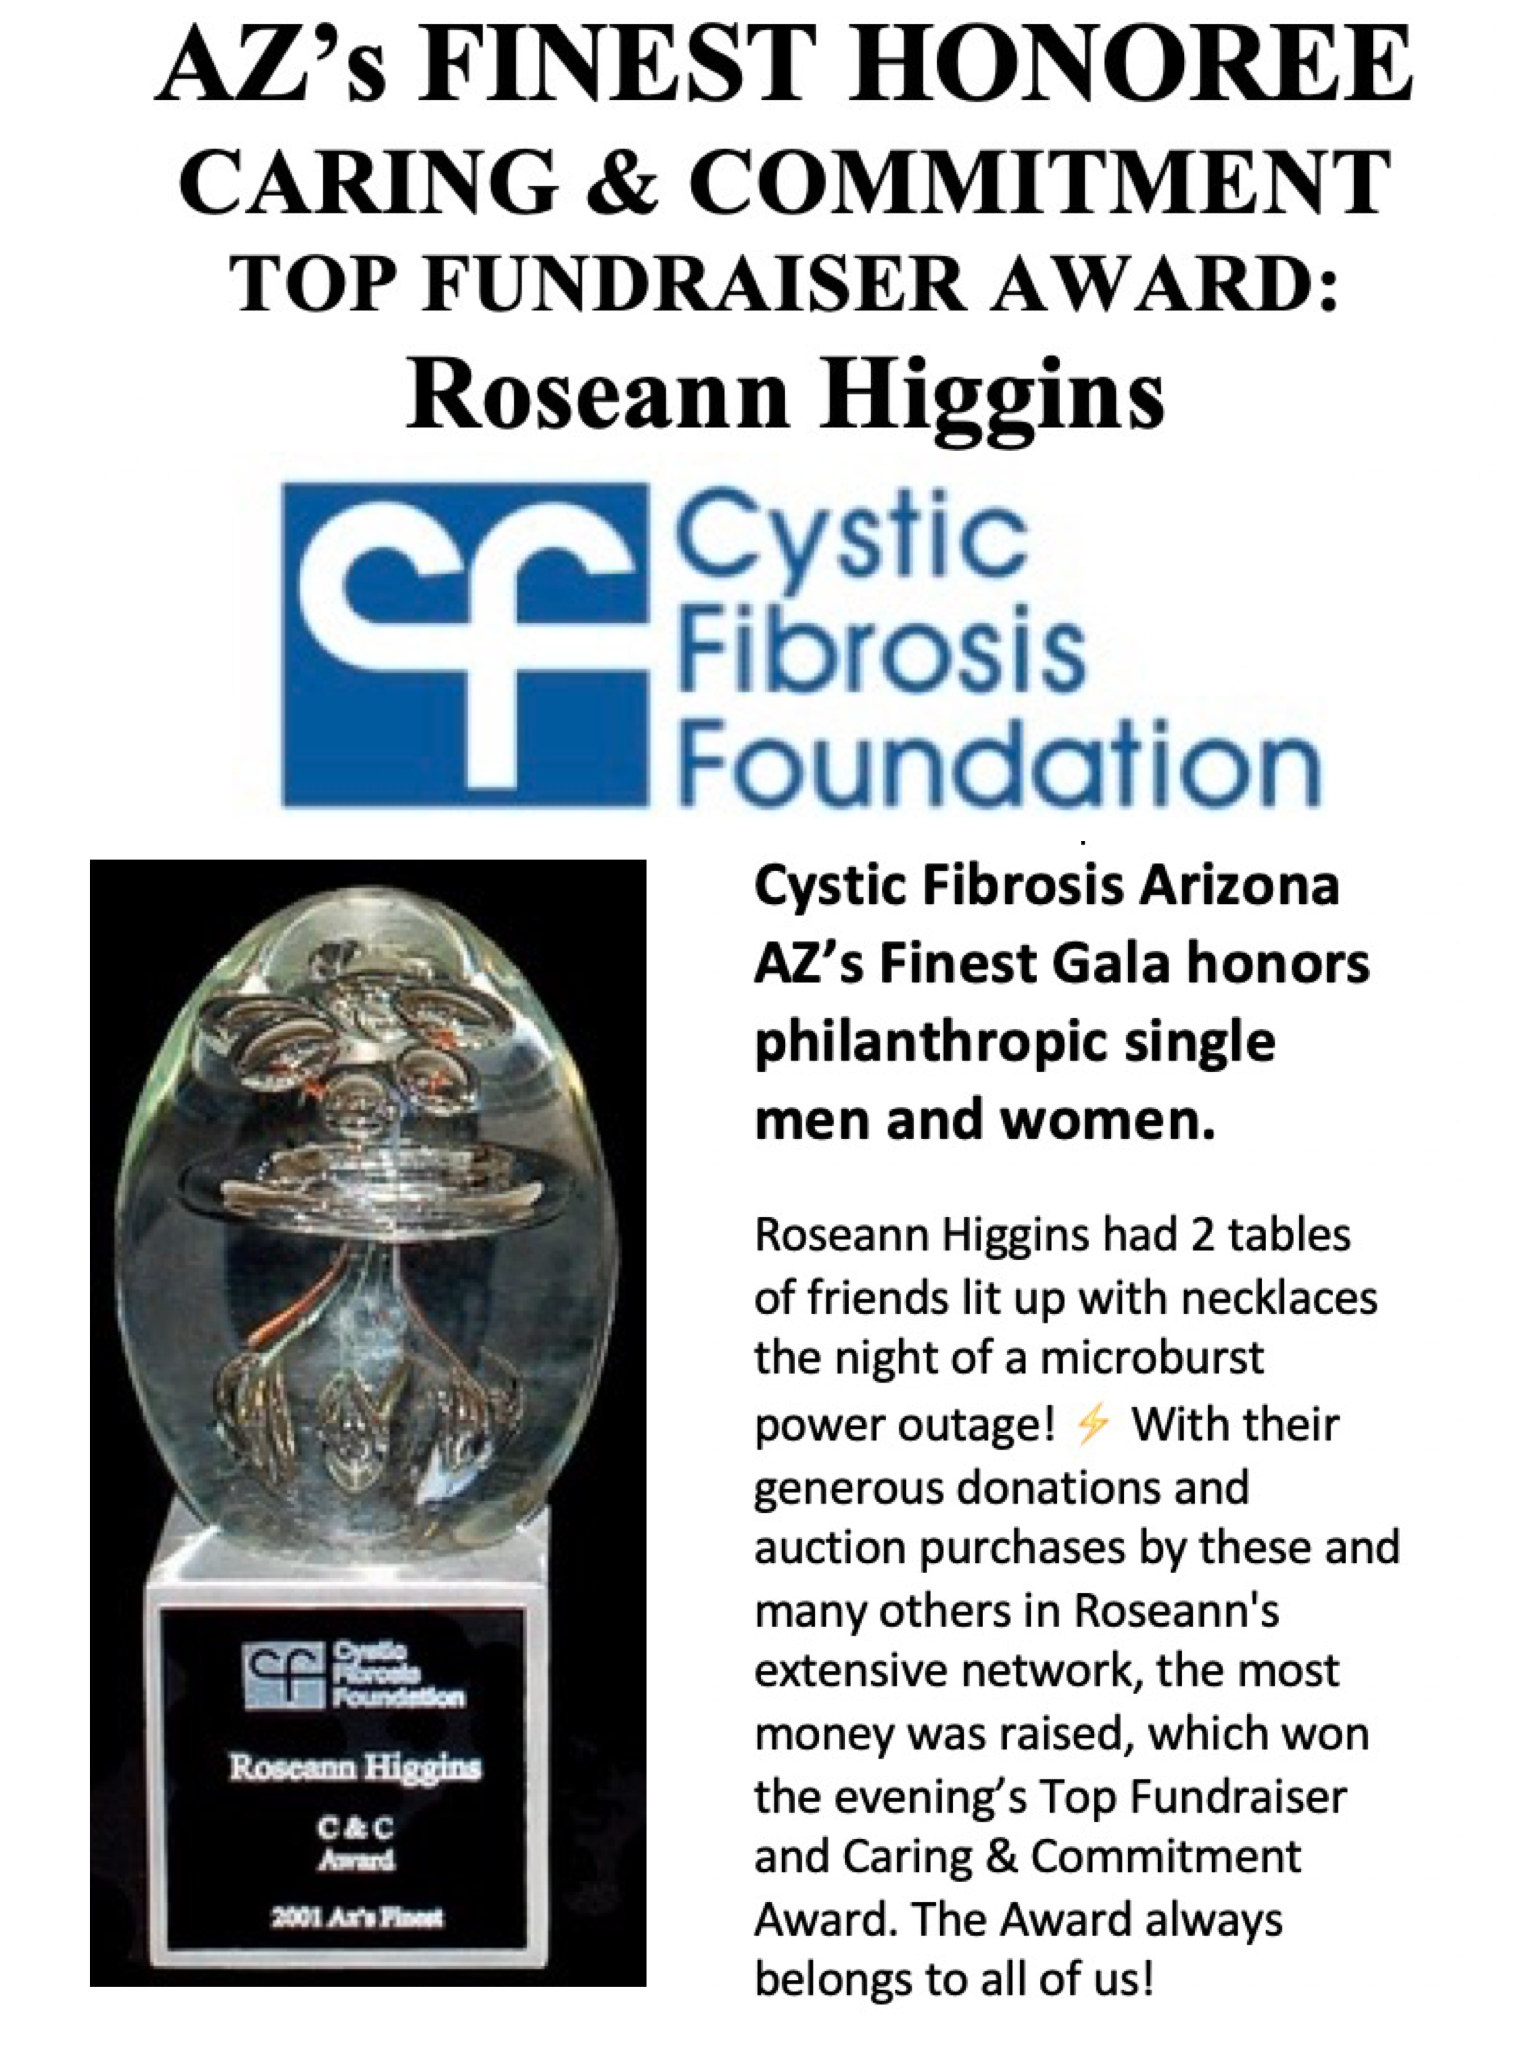 AZ's Finest, Arizona's Finest, Honoree, top fundraiser, Award, Roseann Higgins, fundraising, community involvement, find a cure, CF, Cystic Fibrosis Foundation, Cystic Fibrosis, philanthropy, philanthropic, singles, single men, single women,